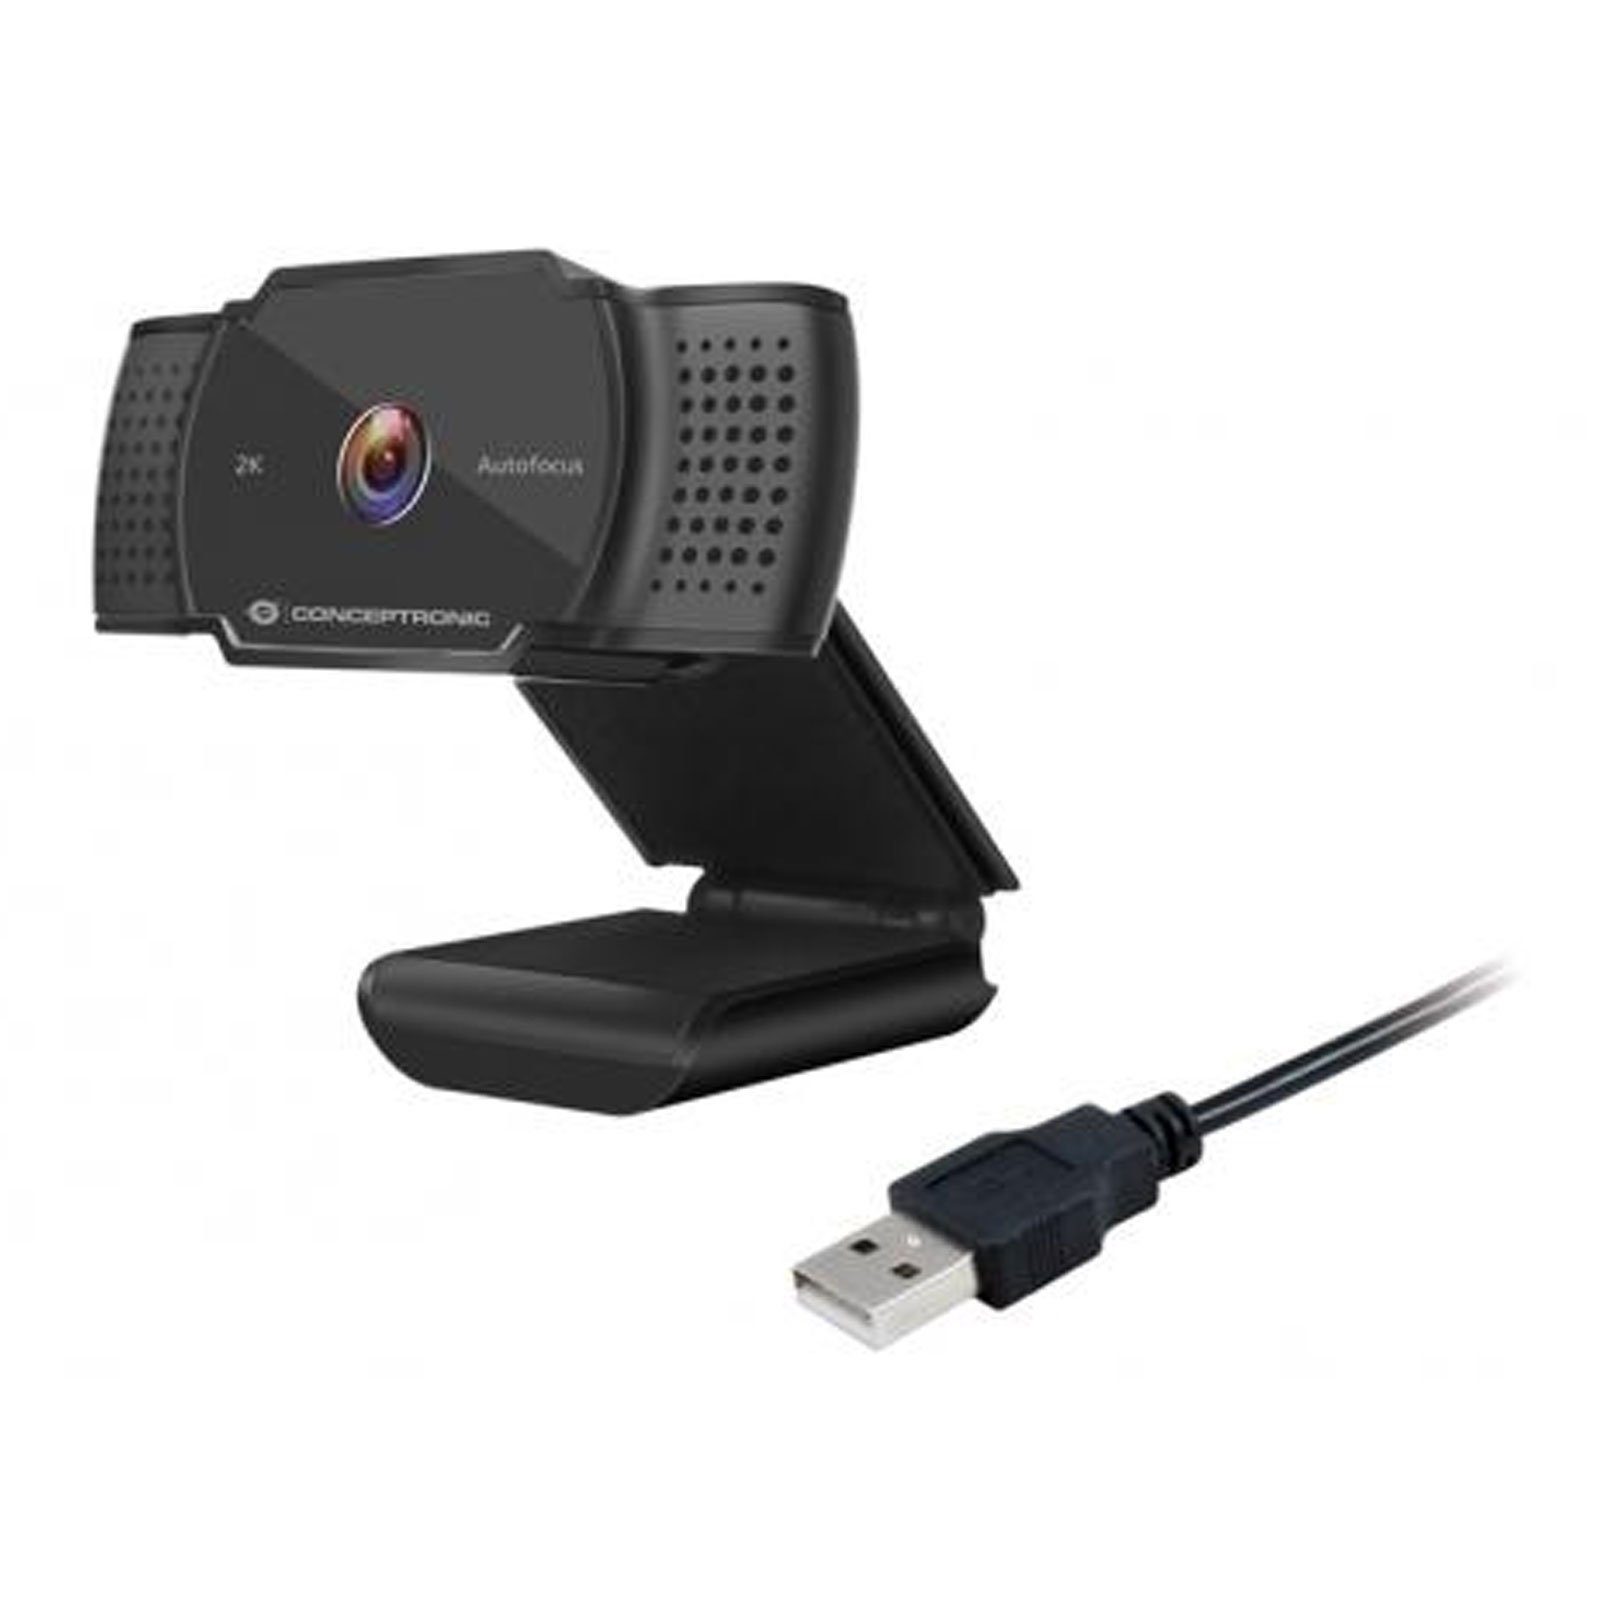 Conceptronic AMDIS 2k HD Webcam Super